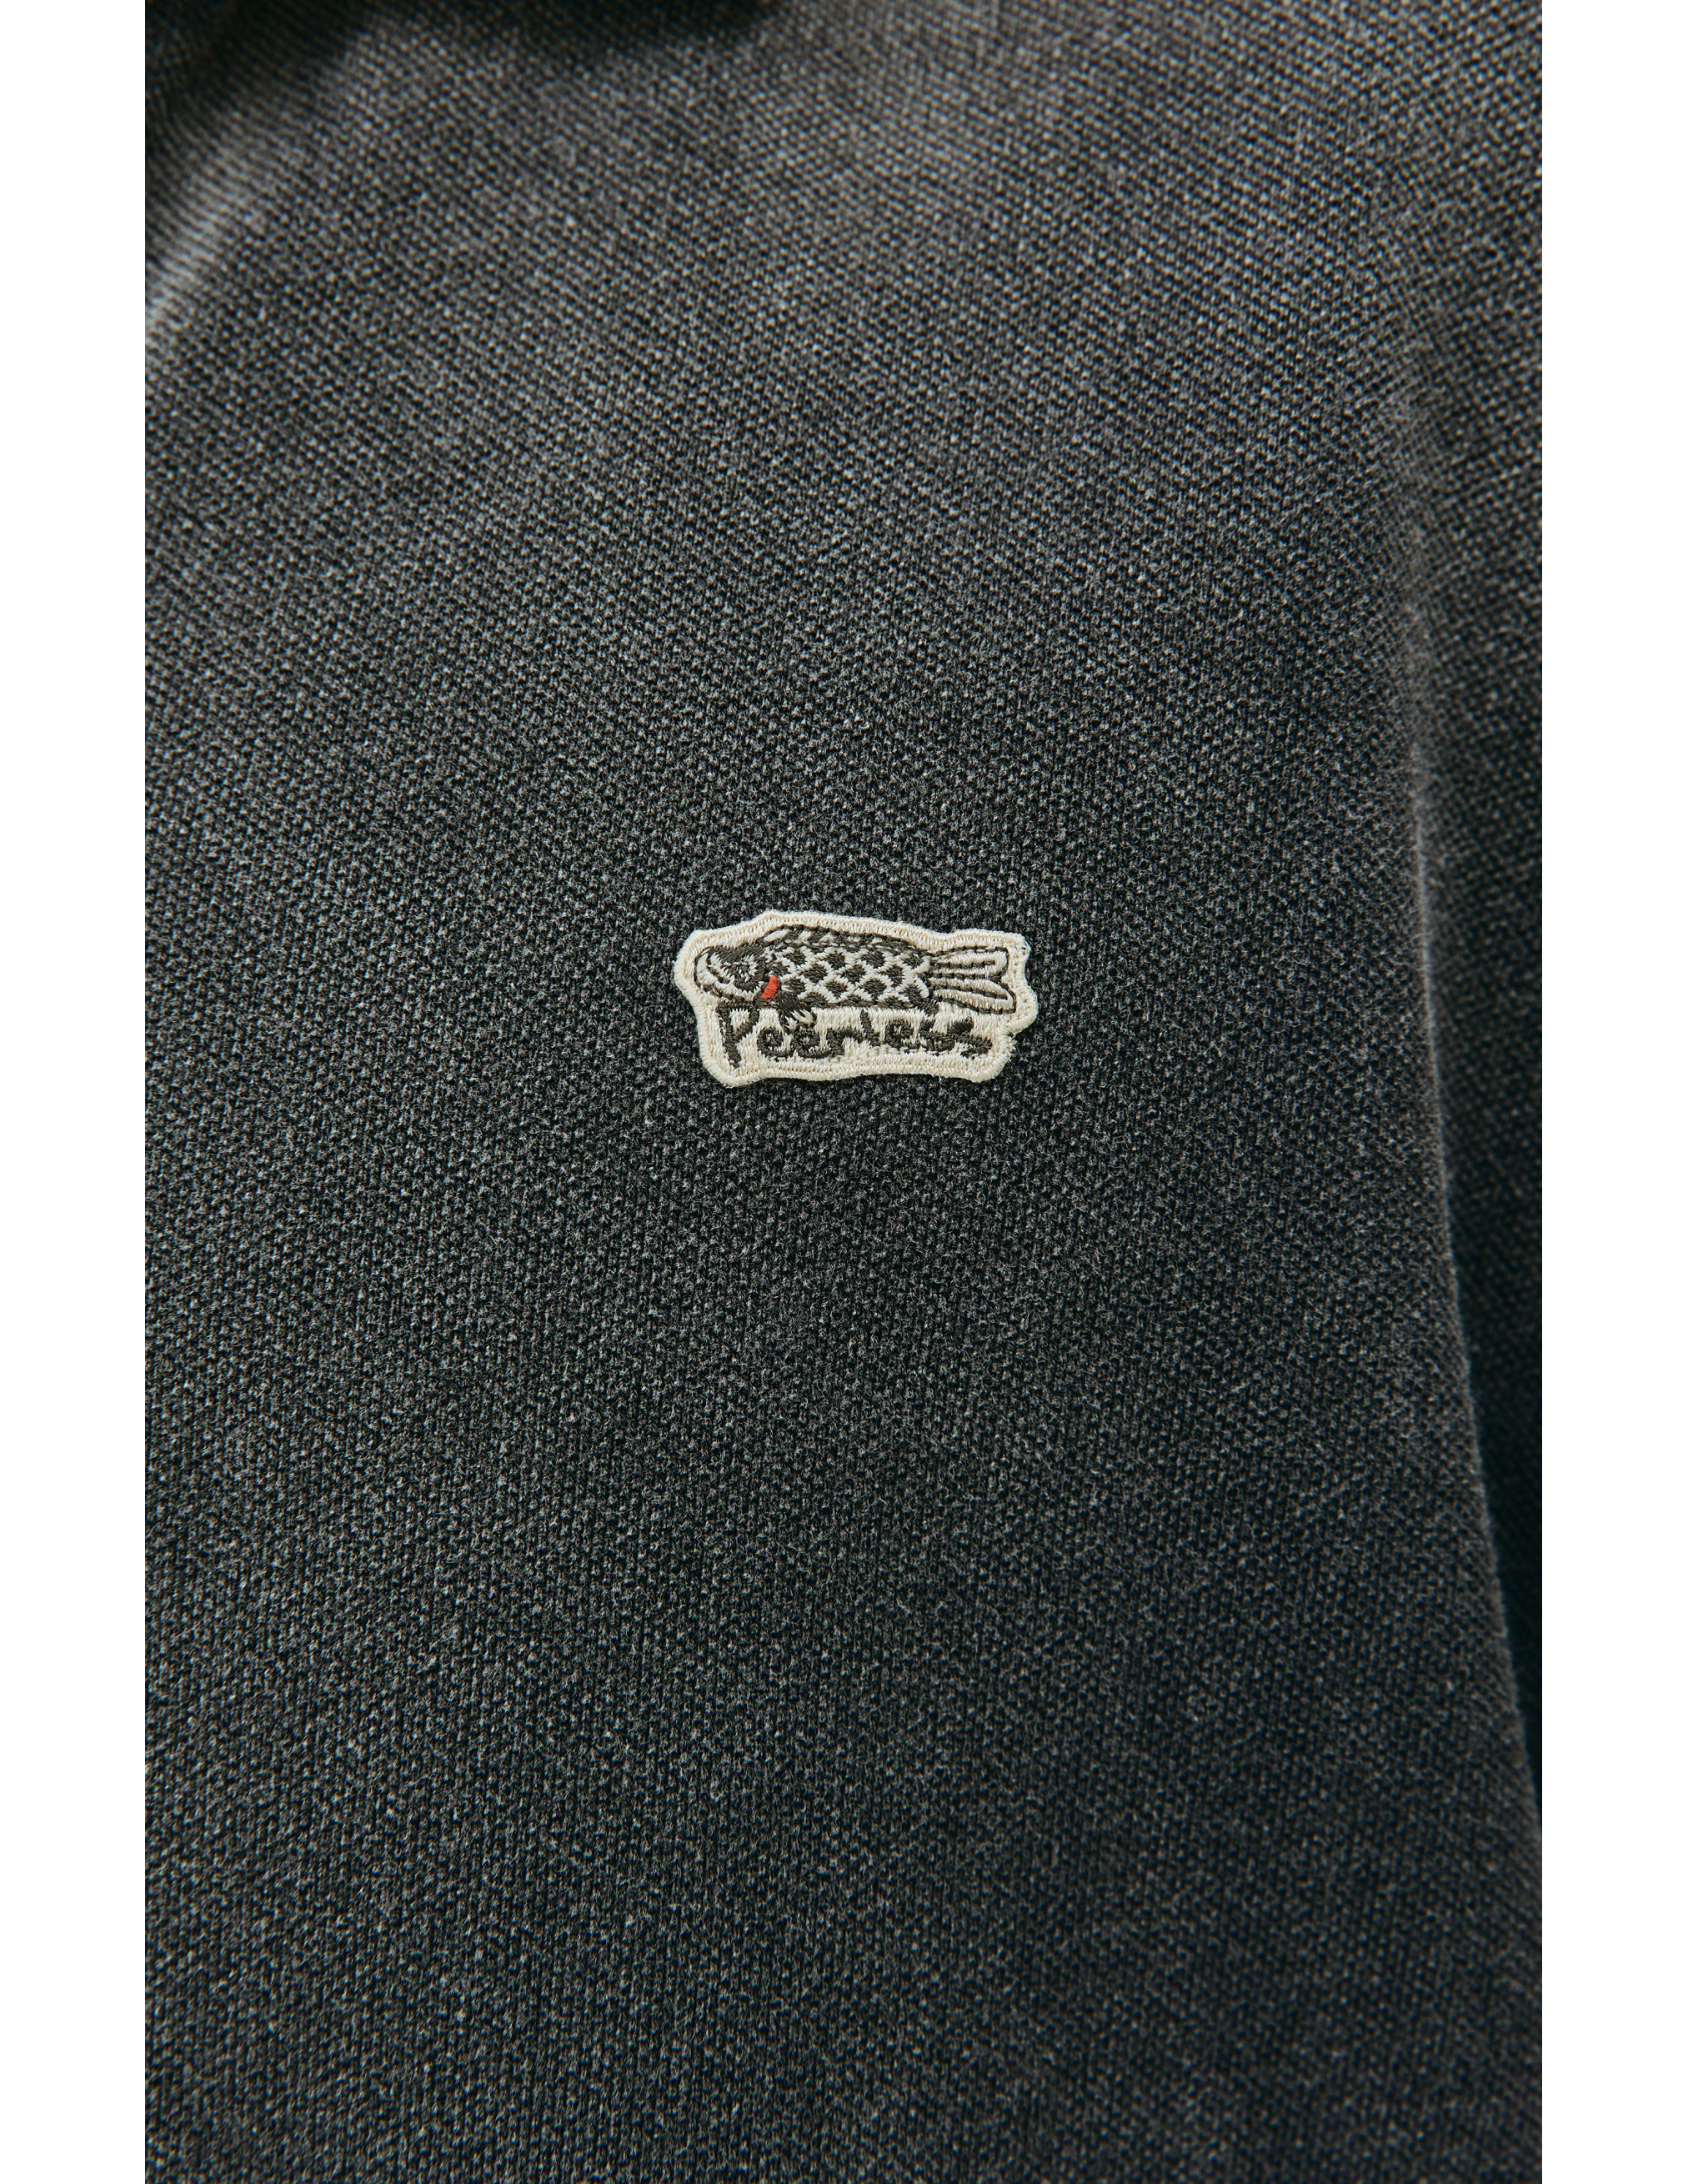 Поло Jumbo Wellers с нашивкой visvim 0123105010021, размер 4 - фото 4